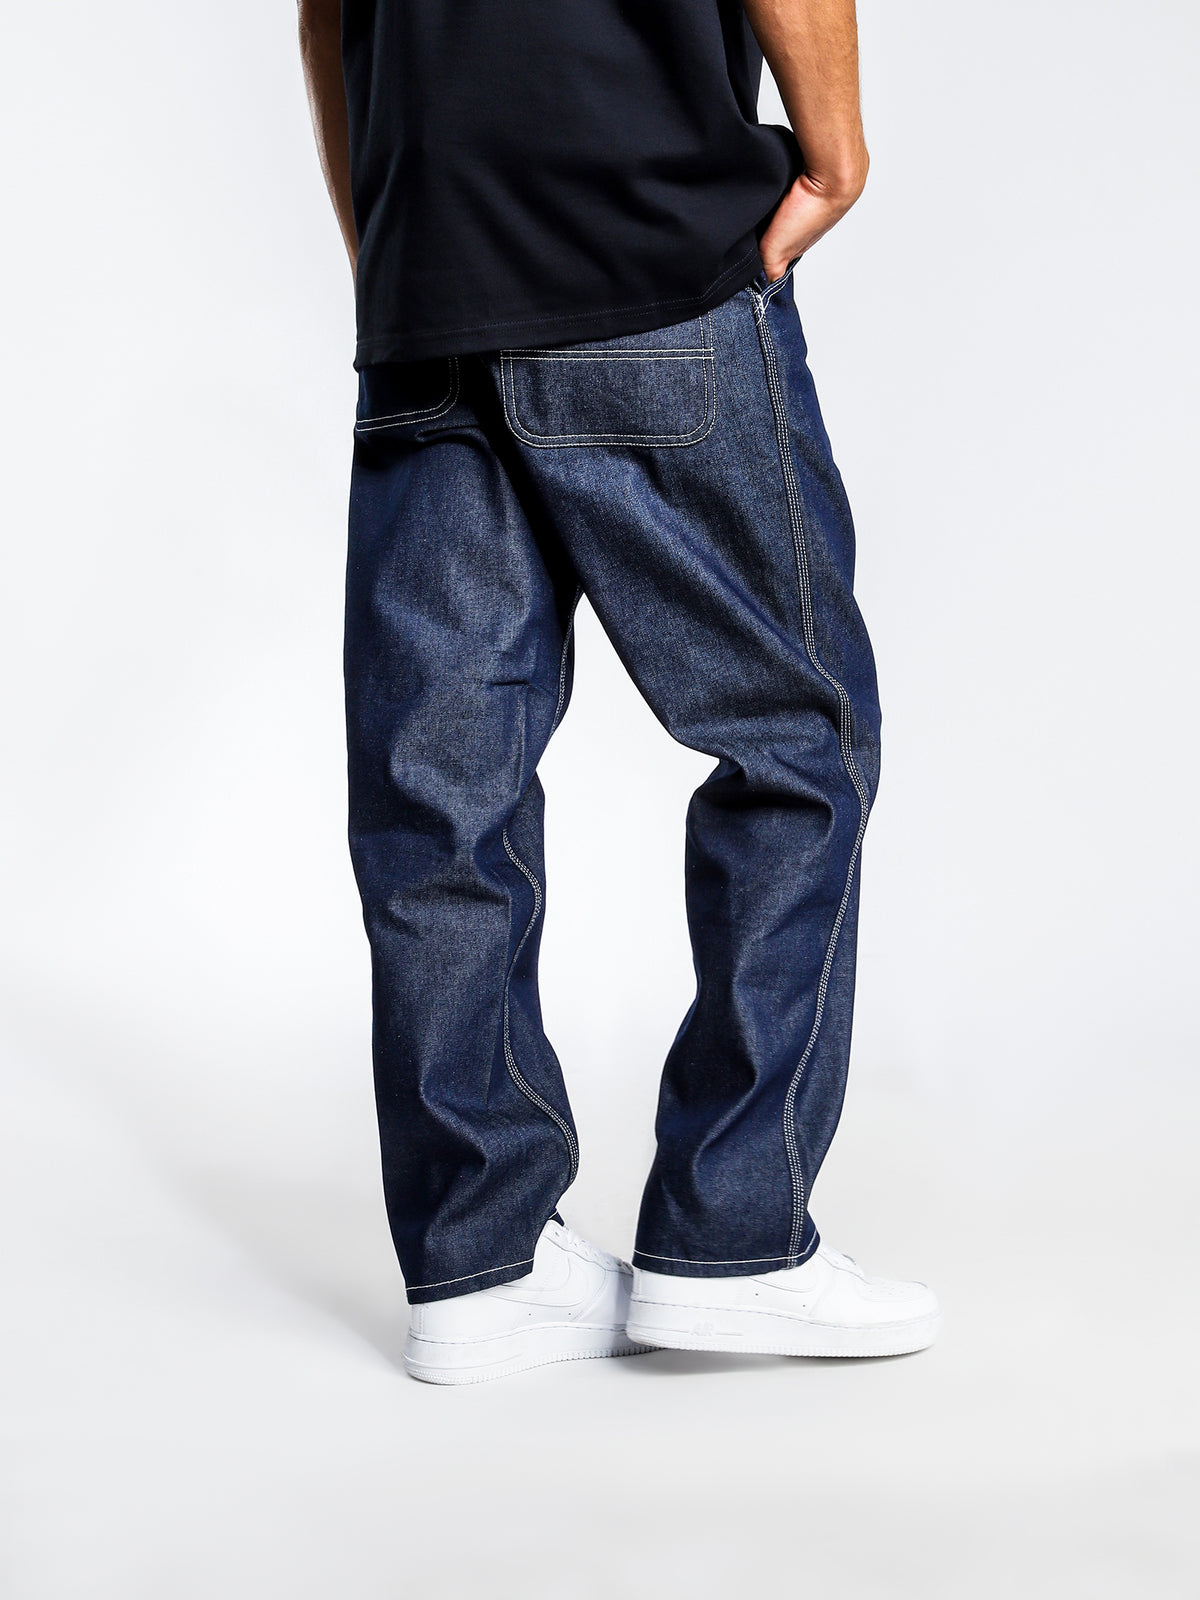 Simple Pants in Norco Blue Denim